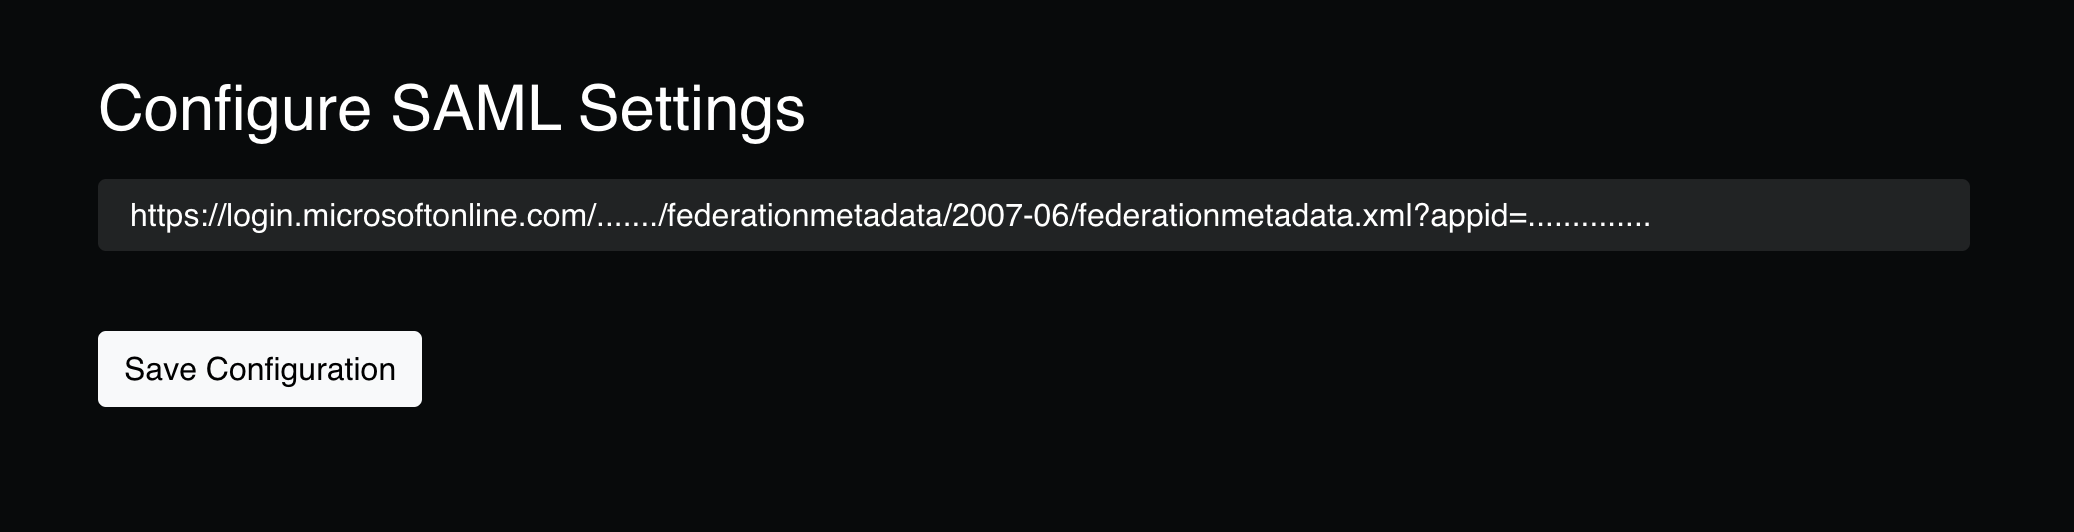 App Federation Metadata URL